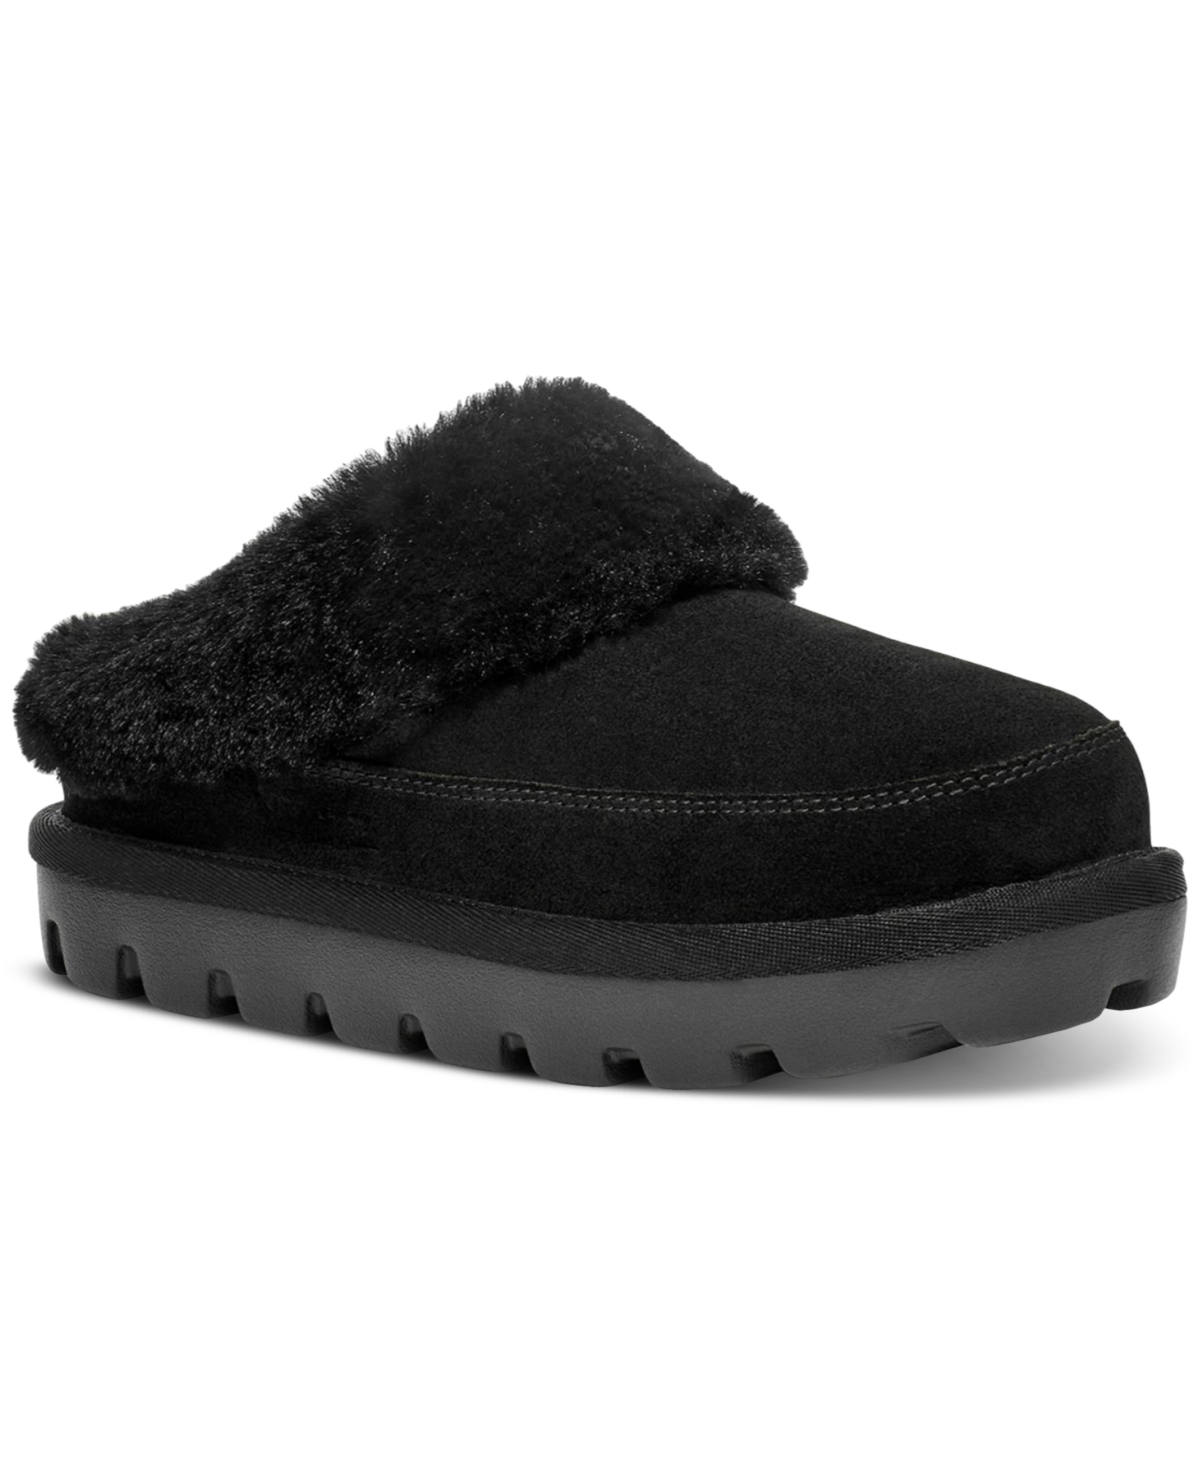 Koolaburra By Ugg Women's Tizzey Round-Toe Slip-On Cozy Slippers Women's Shoes